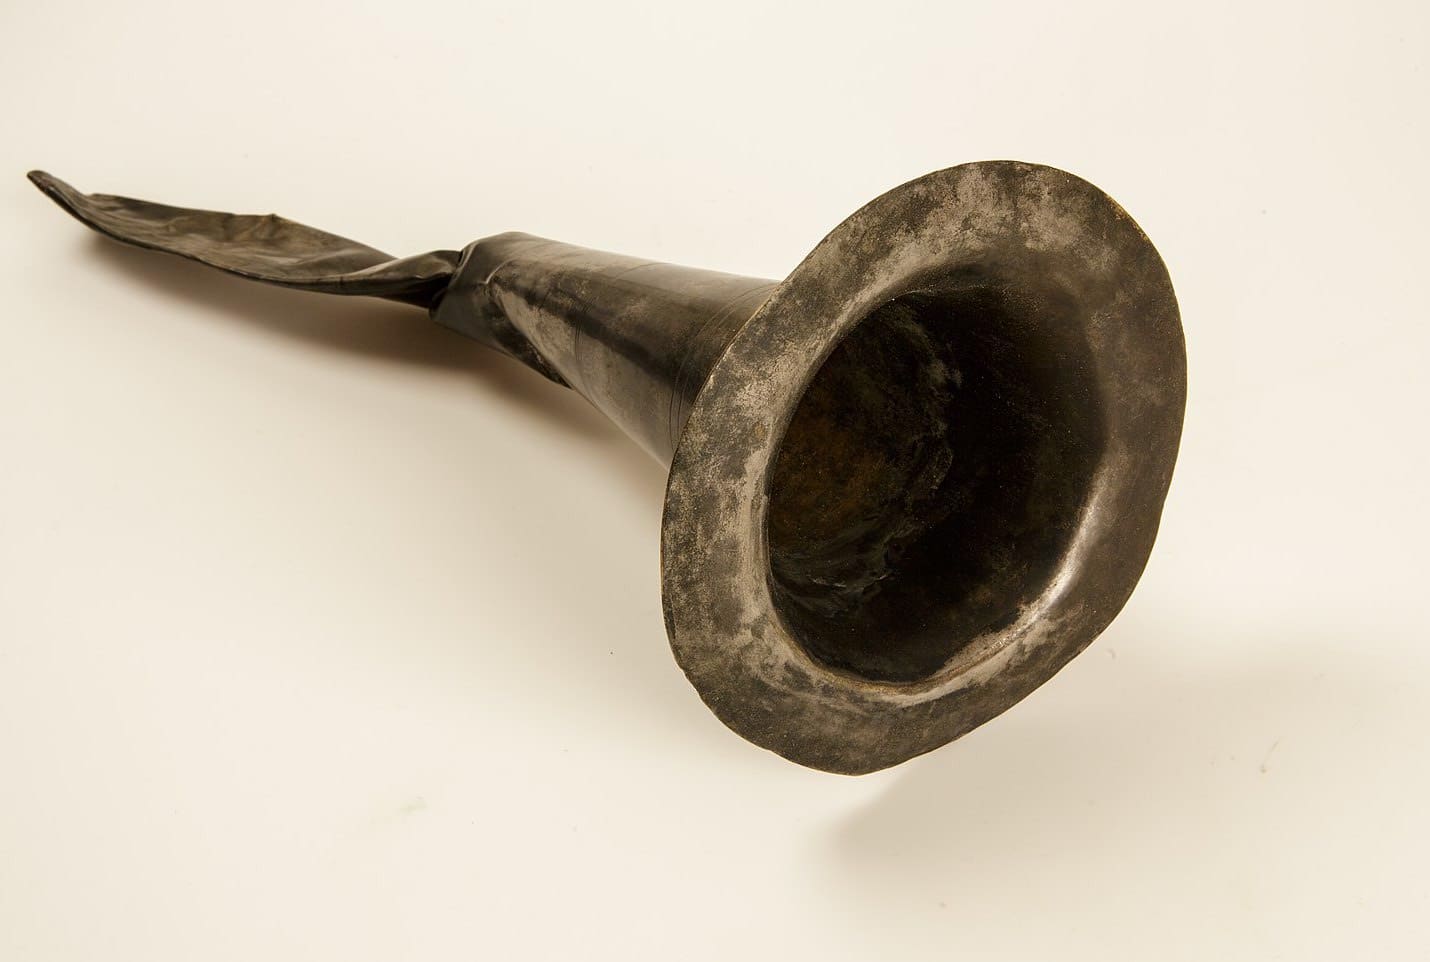 A Roman army signal horn or "cornu", found in Alphen aan den Rijn, Netherlands.